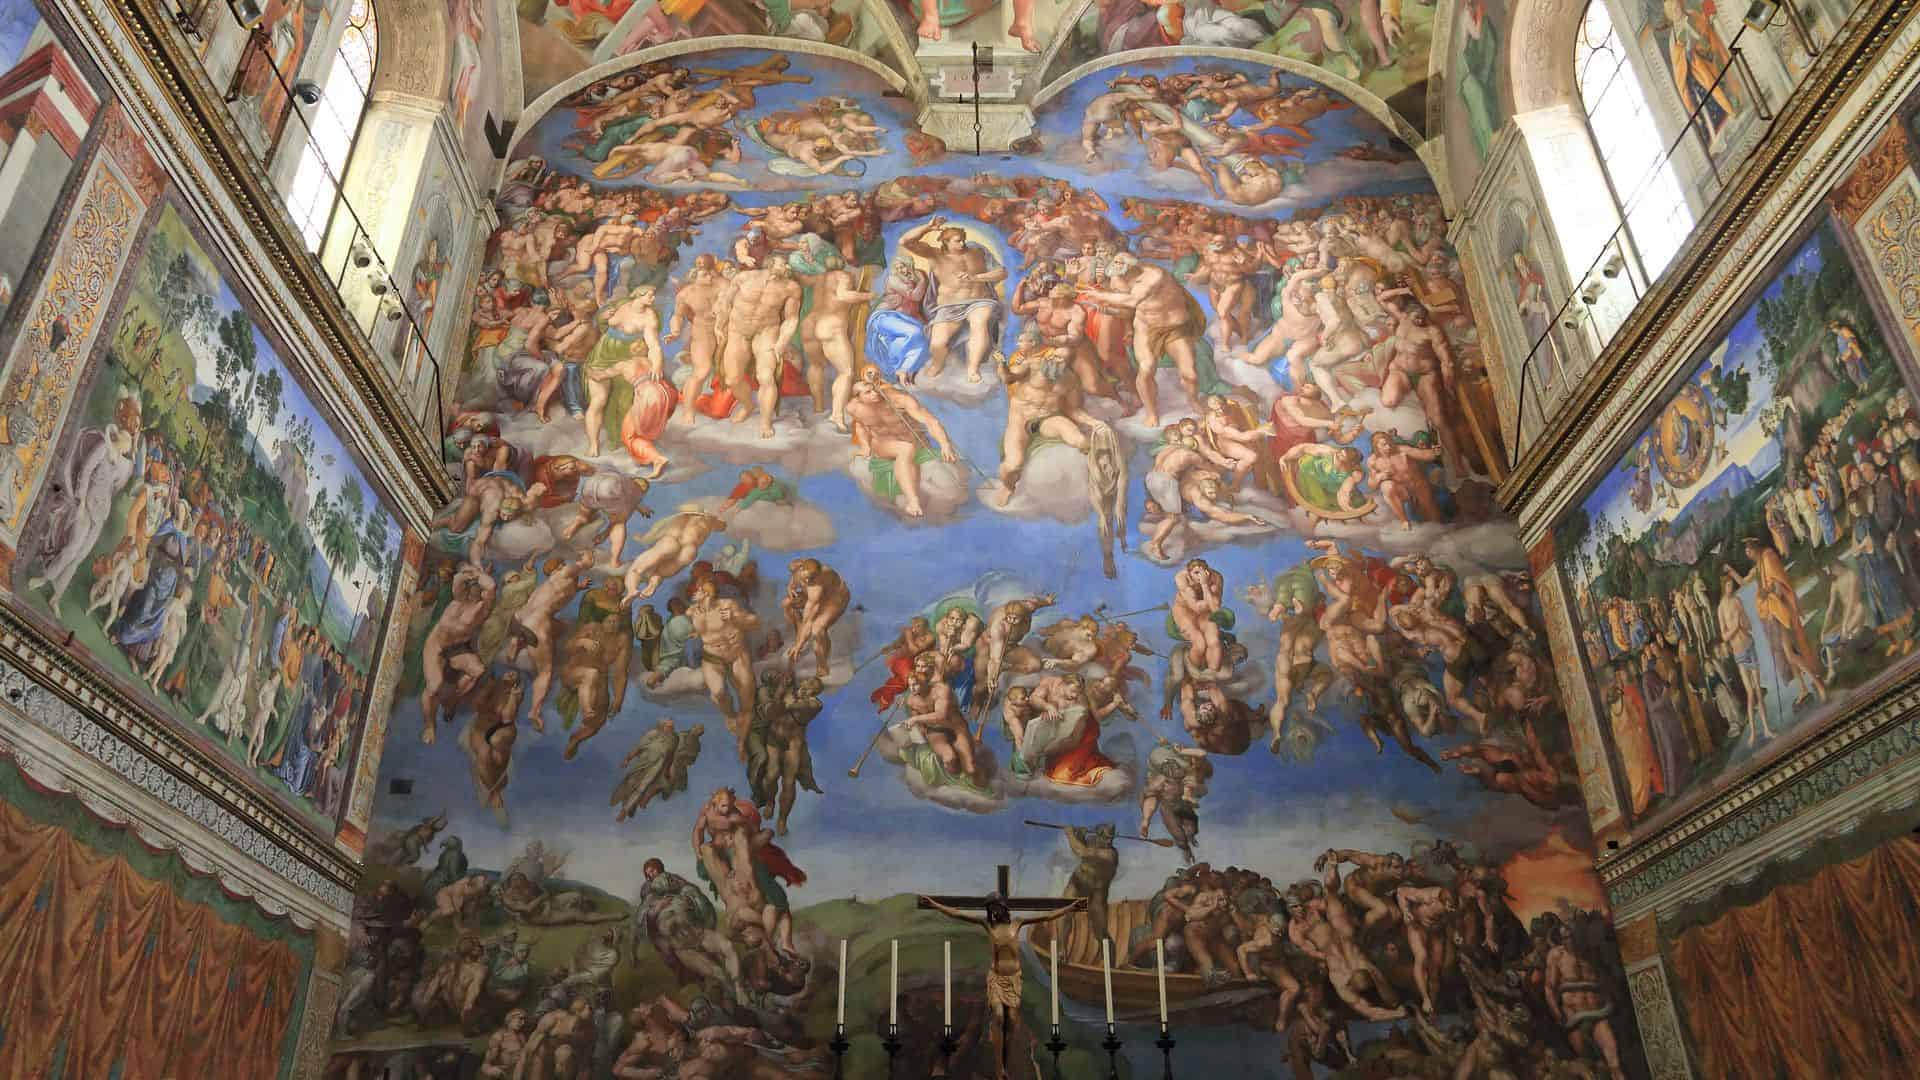 Michelangelo fresco in the The Sistine Chapel, Vatican